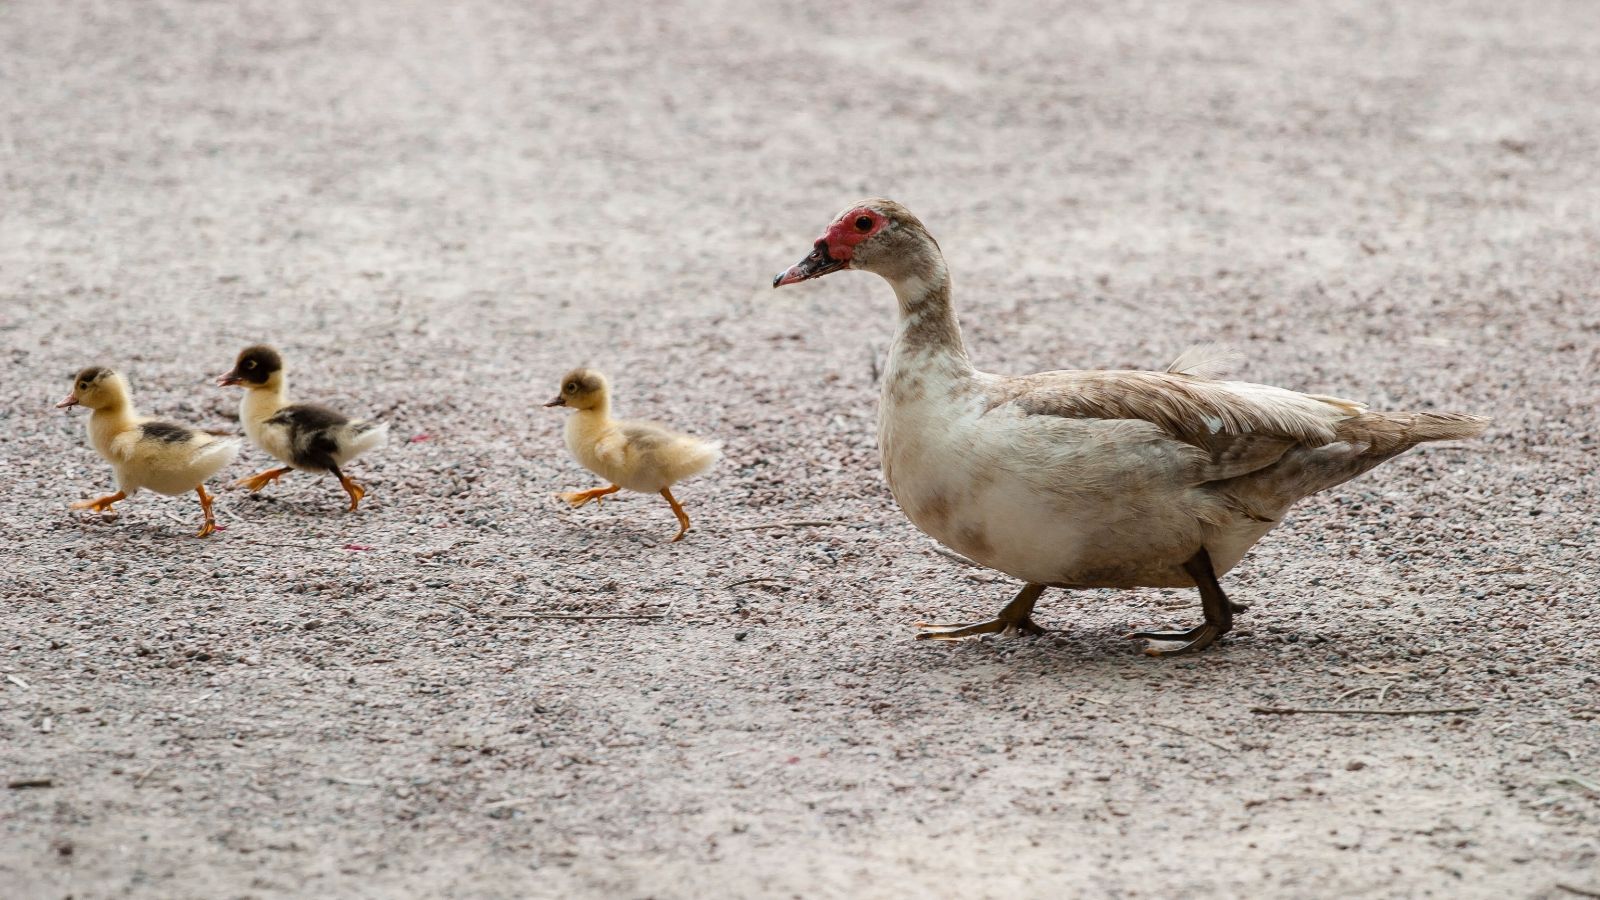 Mother duck follows her three baby ducks